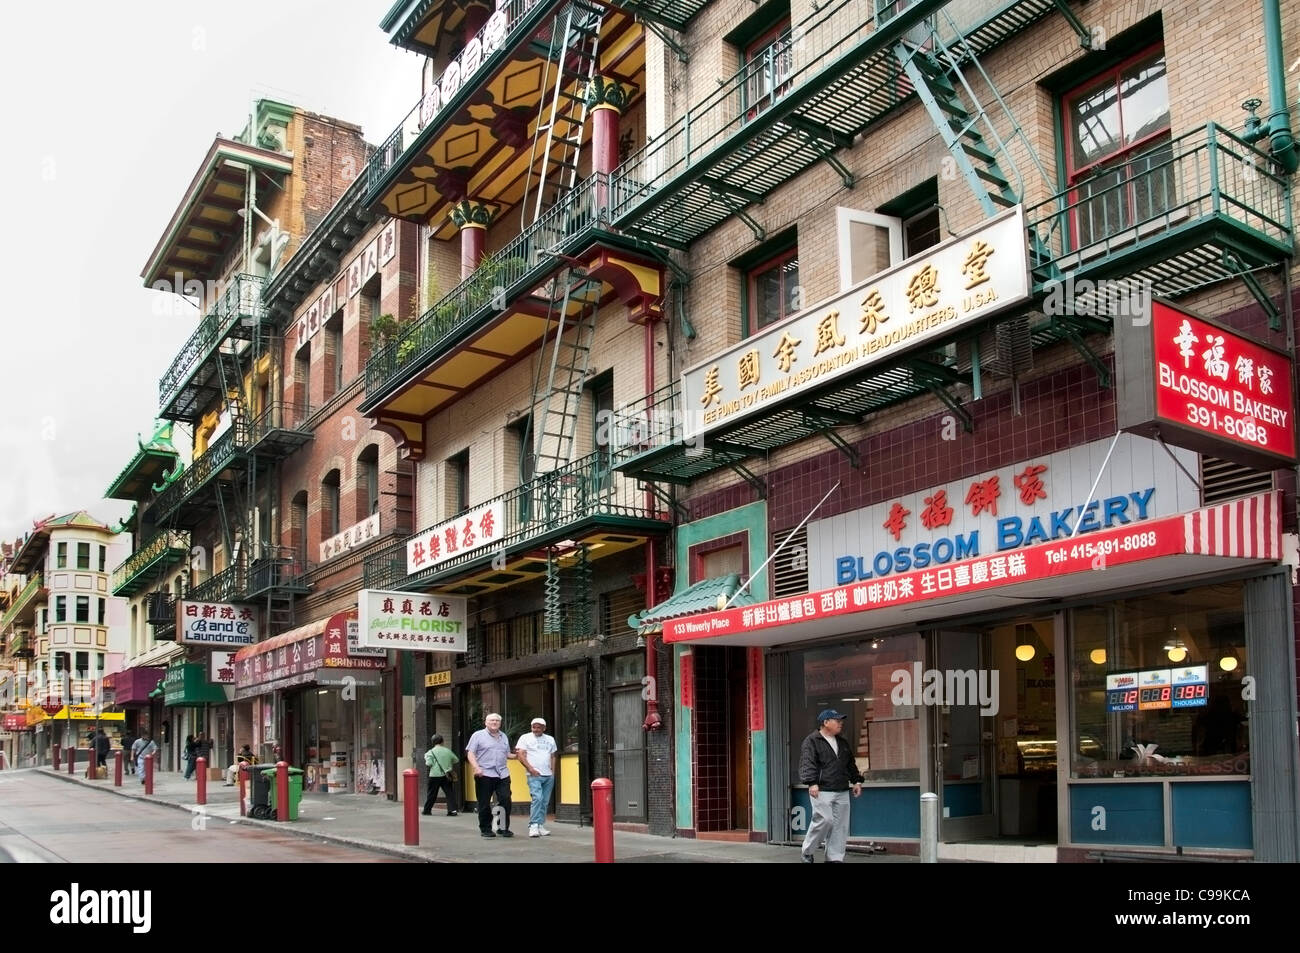 Chinatown China Town Chinese San Francisco California United States of America Stock Photo